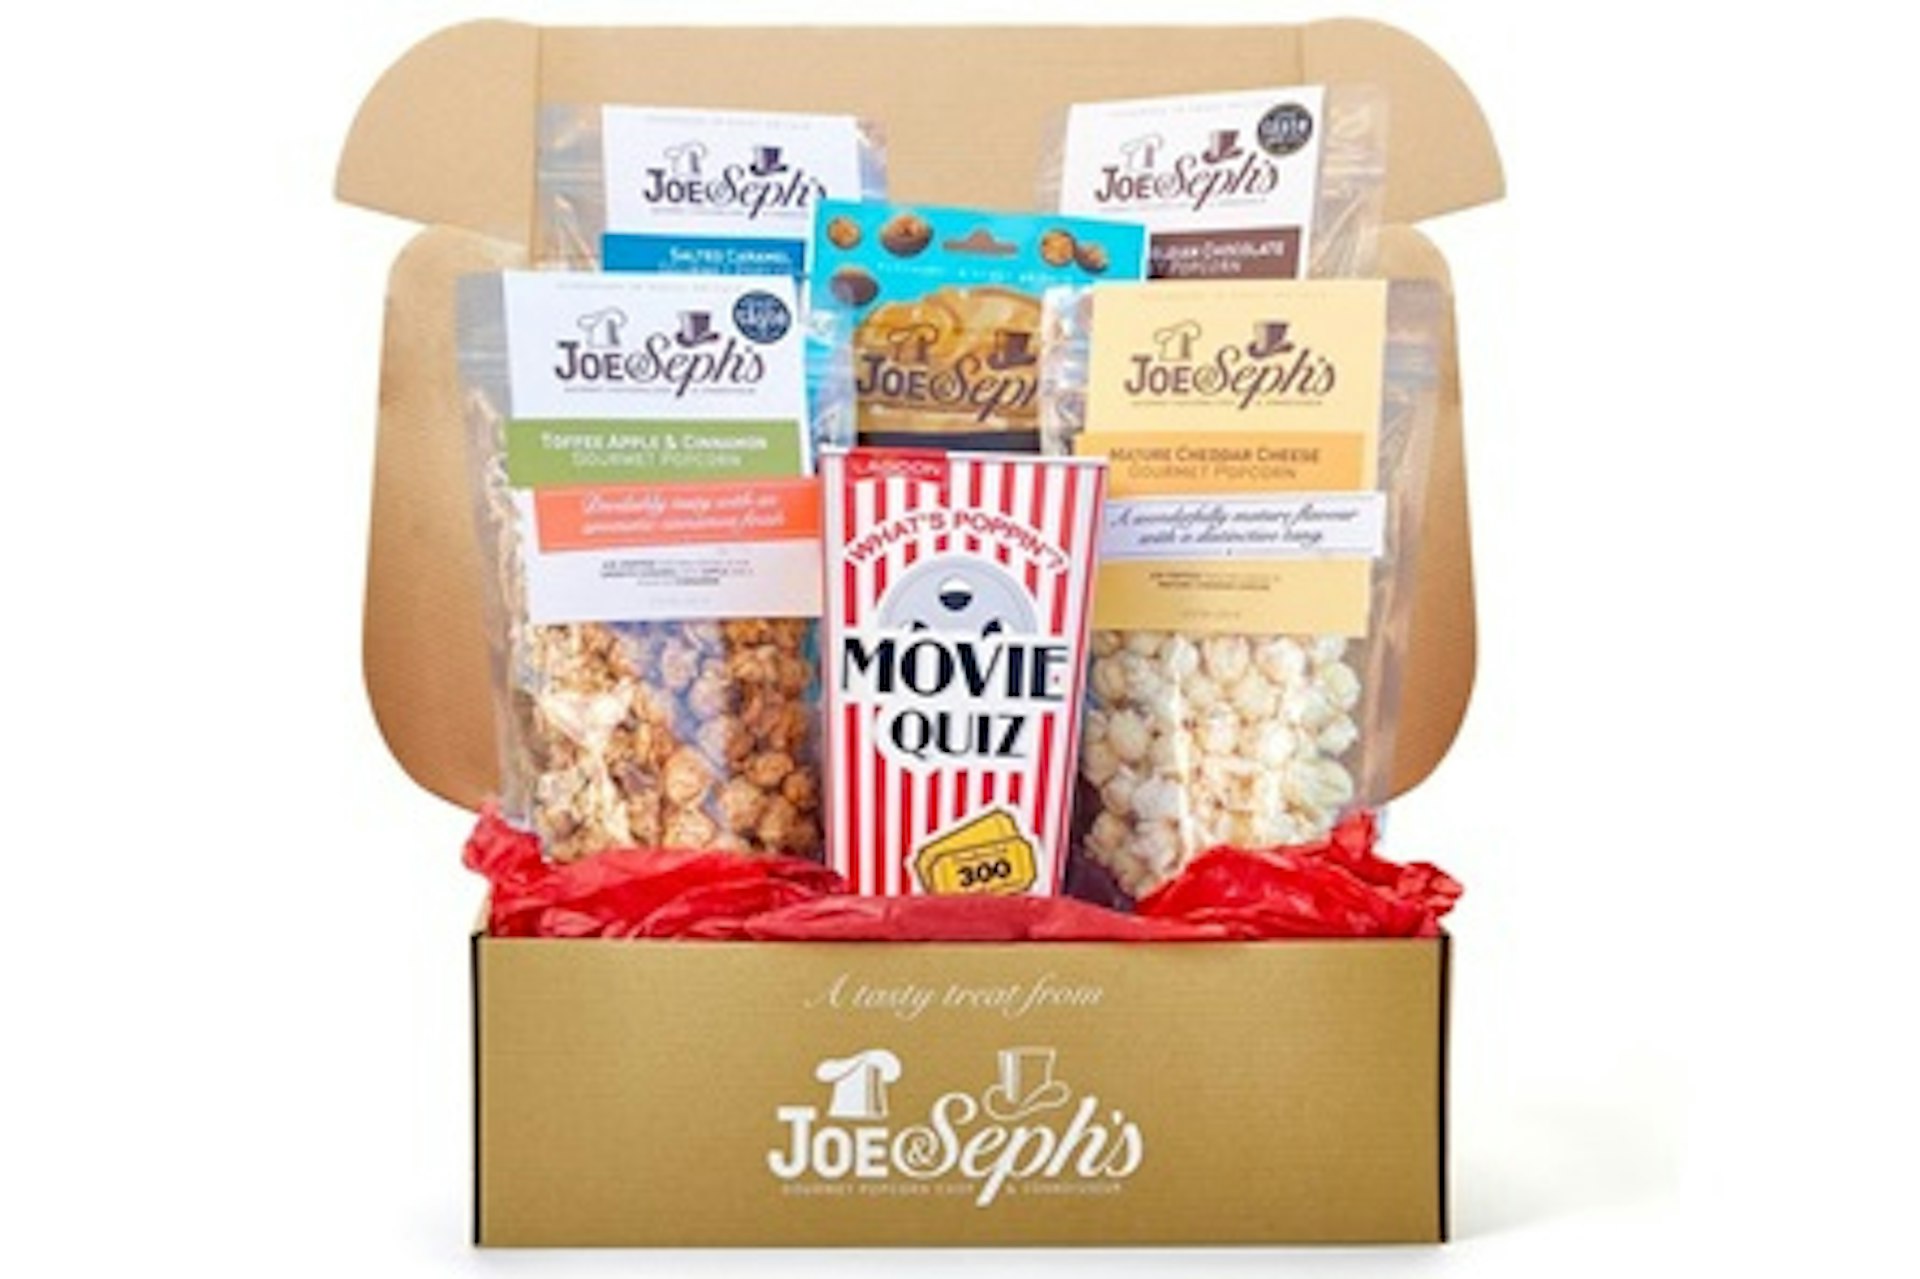 Movie Quiz Gift Box with Joe & Seph’s Popcorn 1